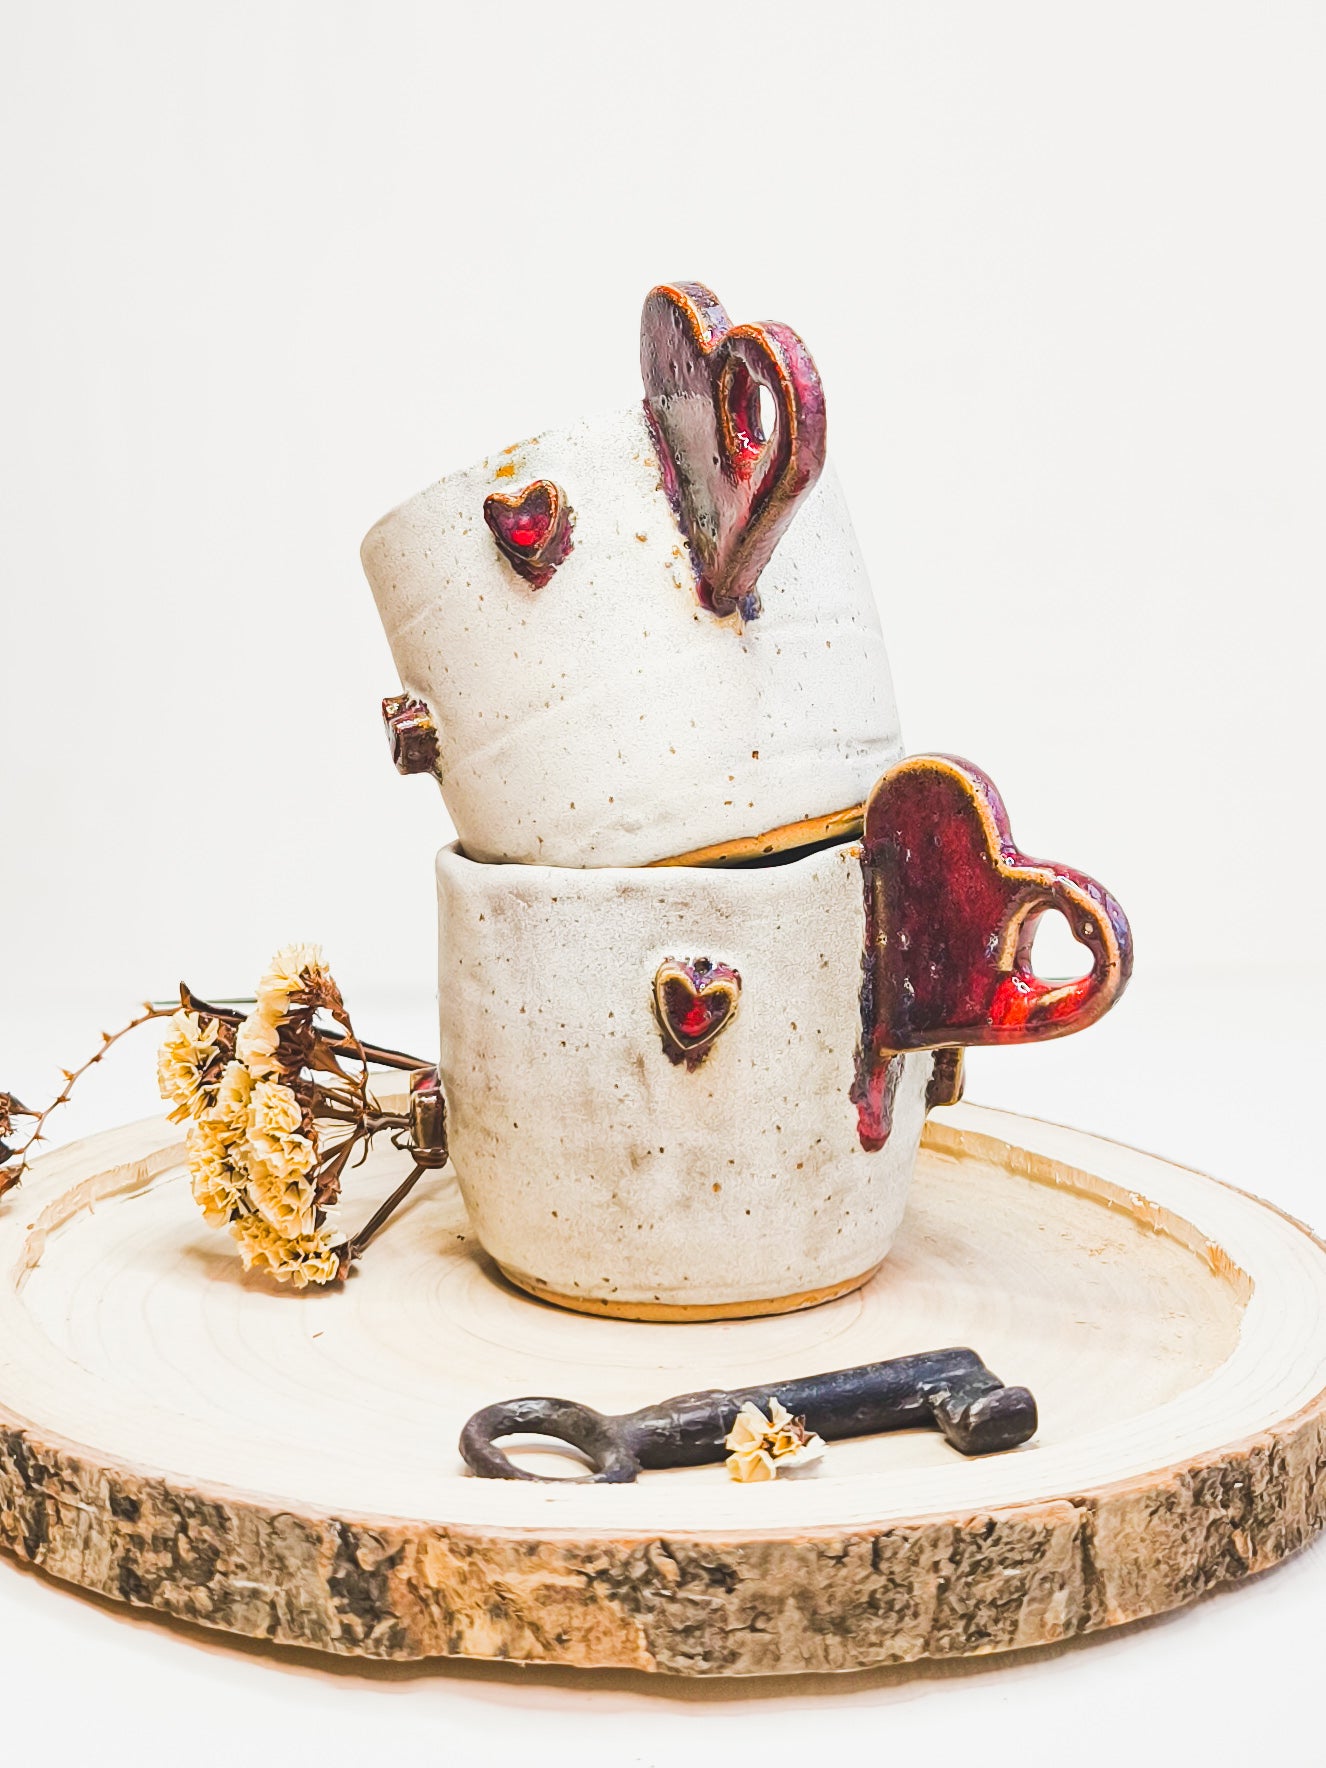 Ceramic coffee or tea mug with a 3D hearts and heart-shaped handle